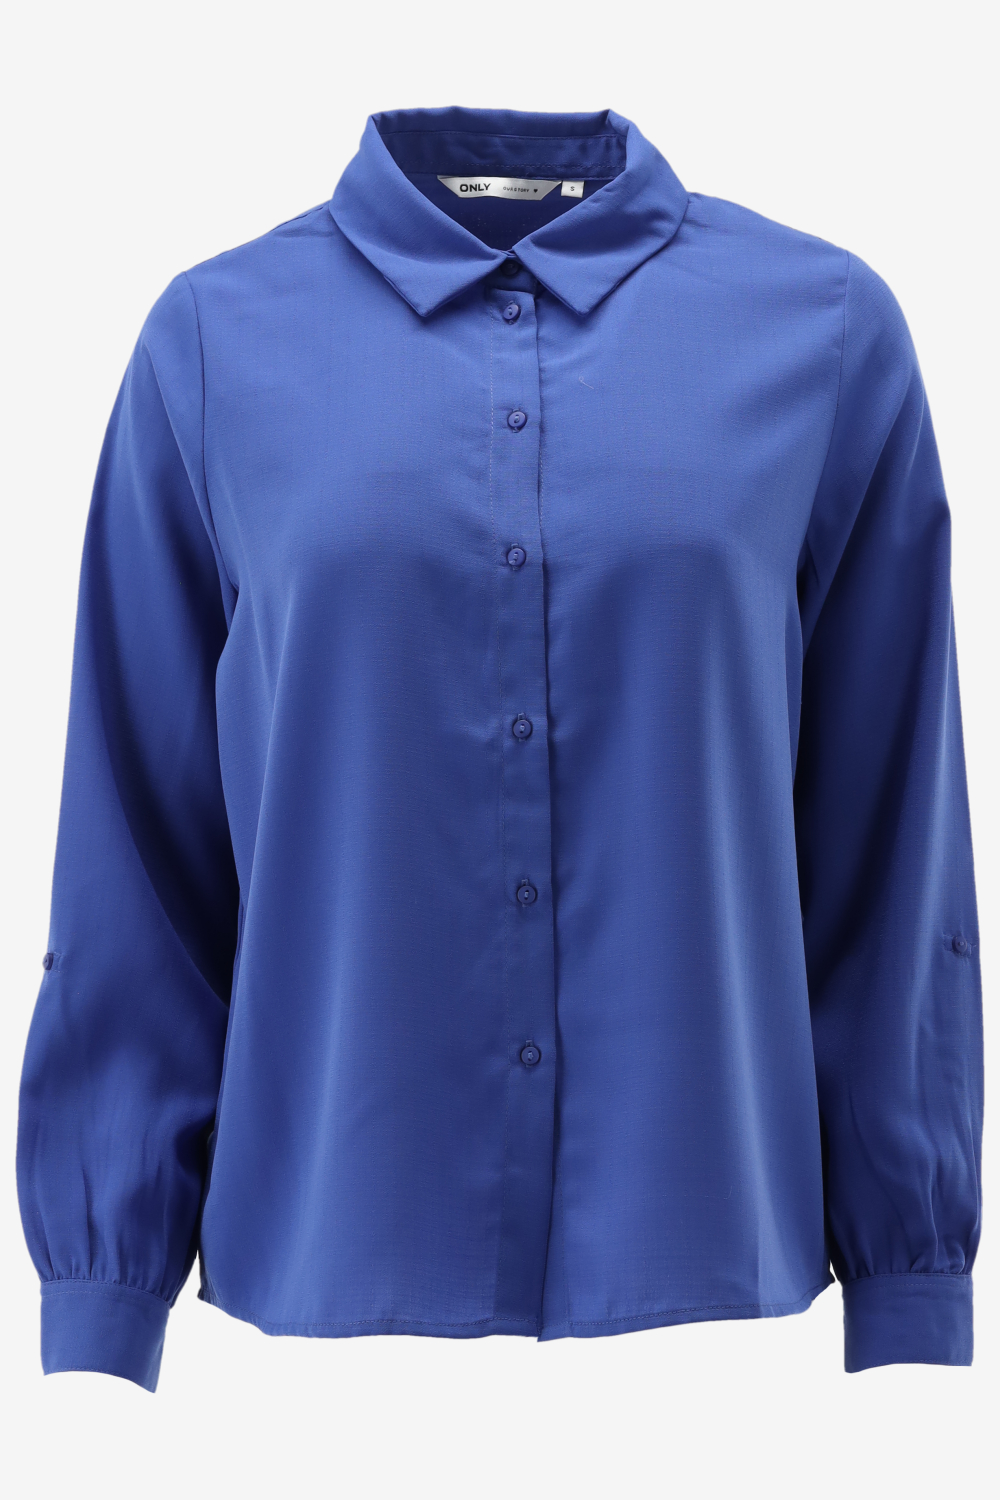 Only Onlmulan L/s Fold Up Shirt Dazzling Blue BLAUW S